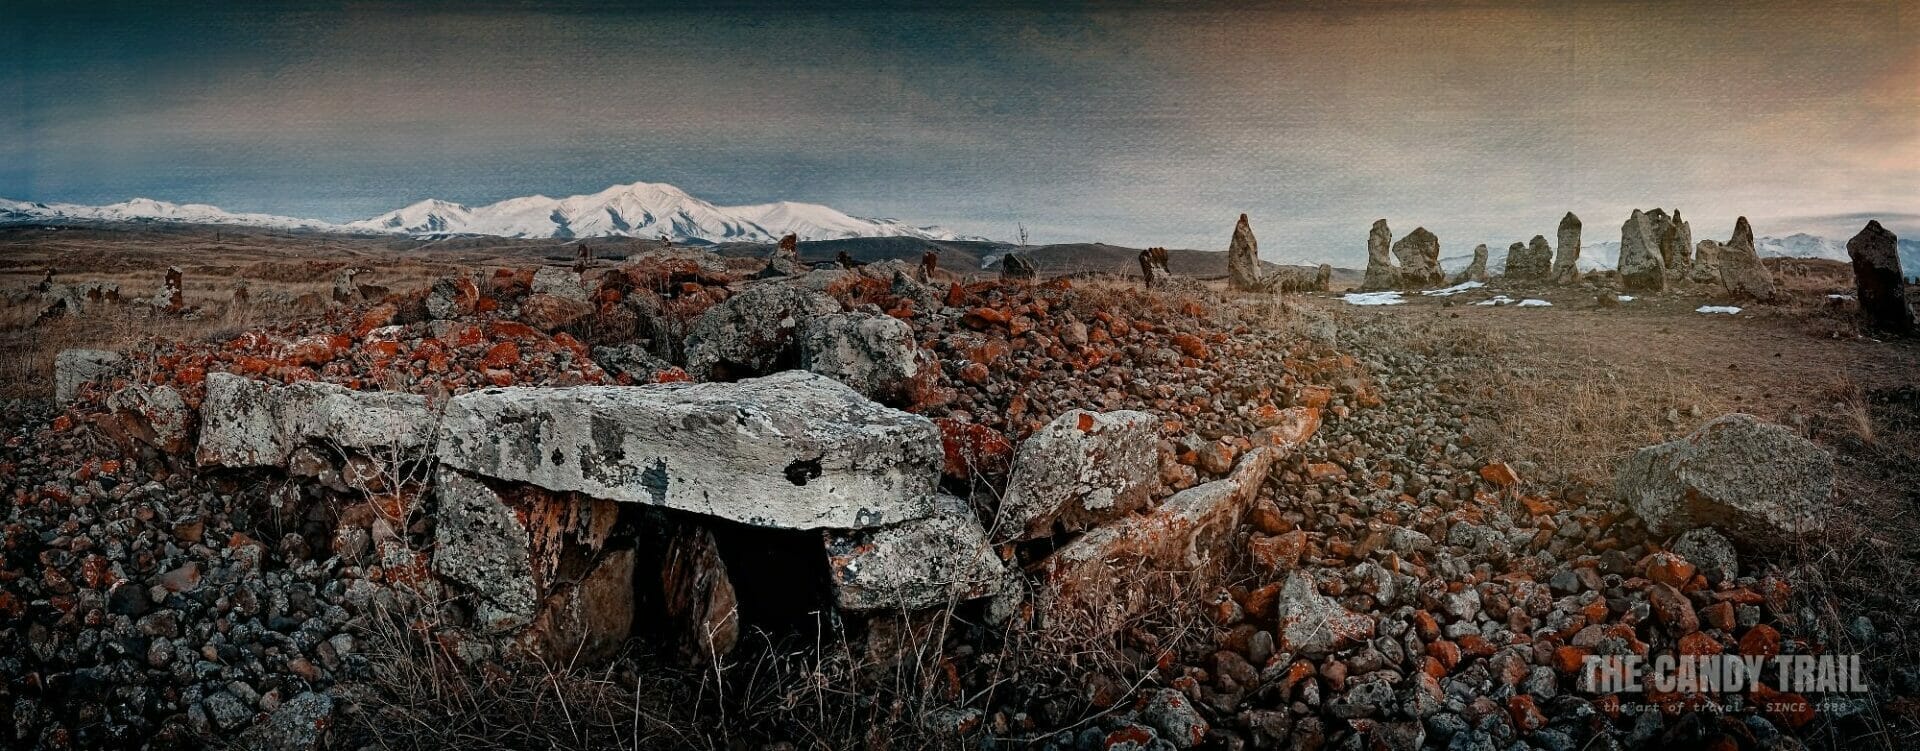 Zorats Karer stone circle in Armenia amid a snowy mountain panorama.